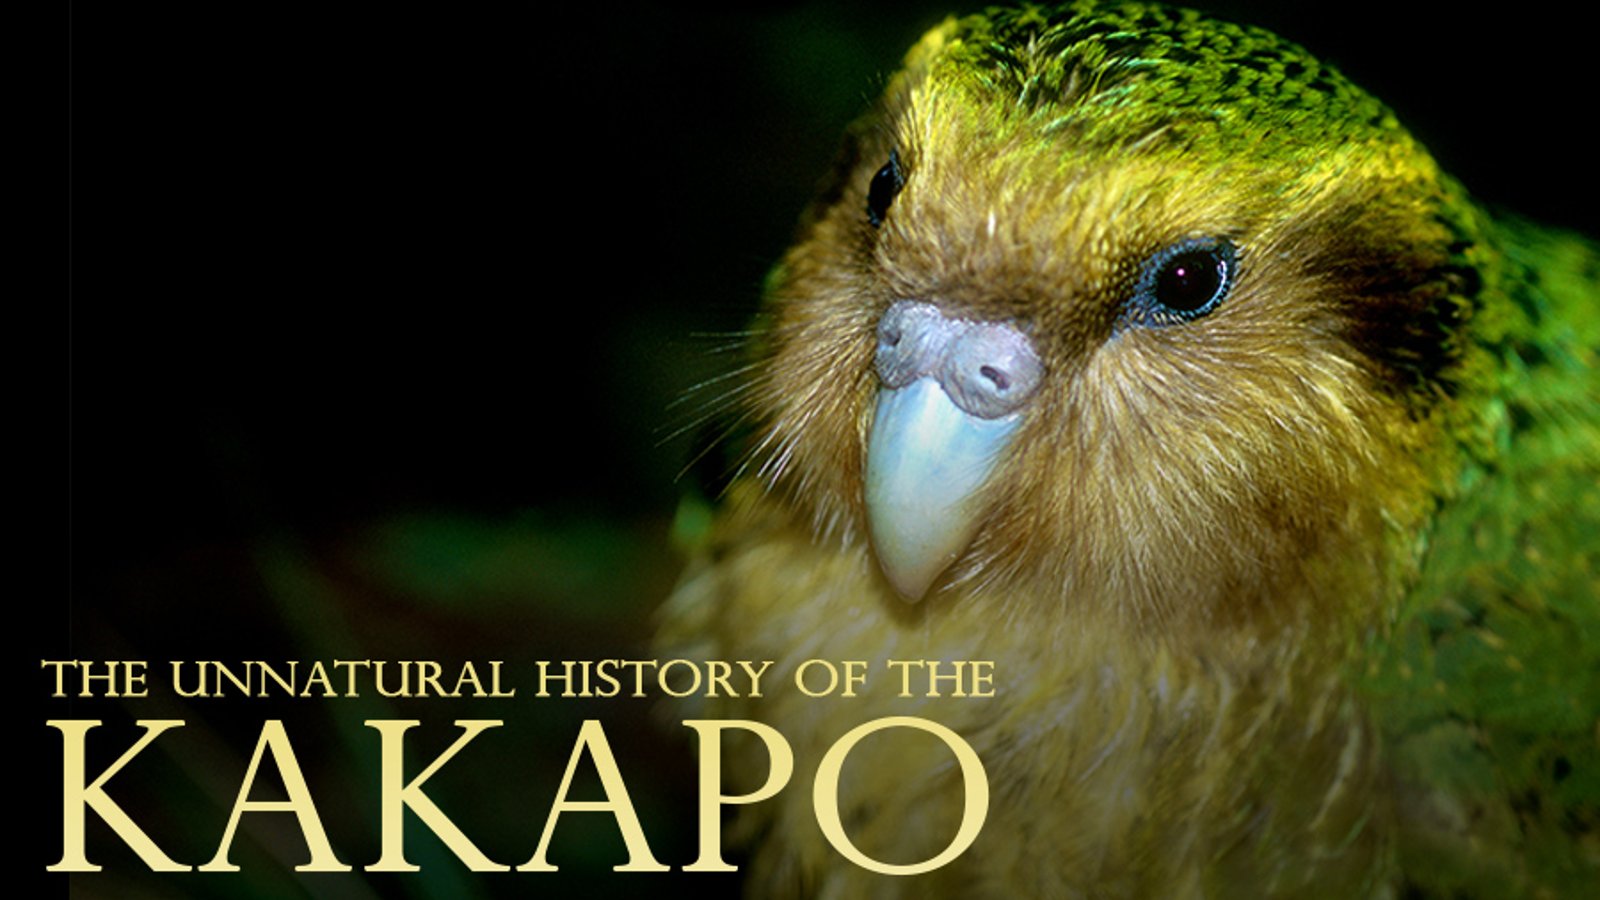 The Unnatural History of the Kakapo